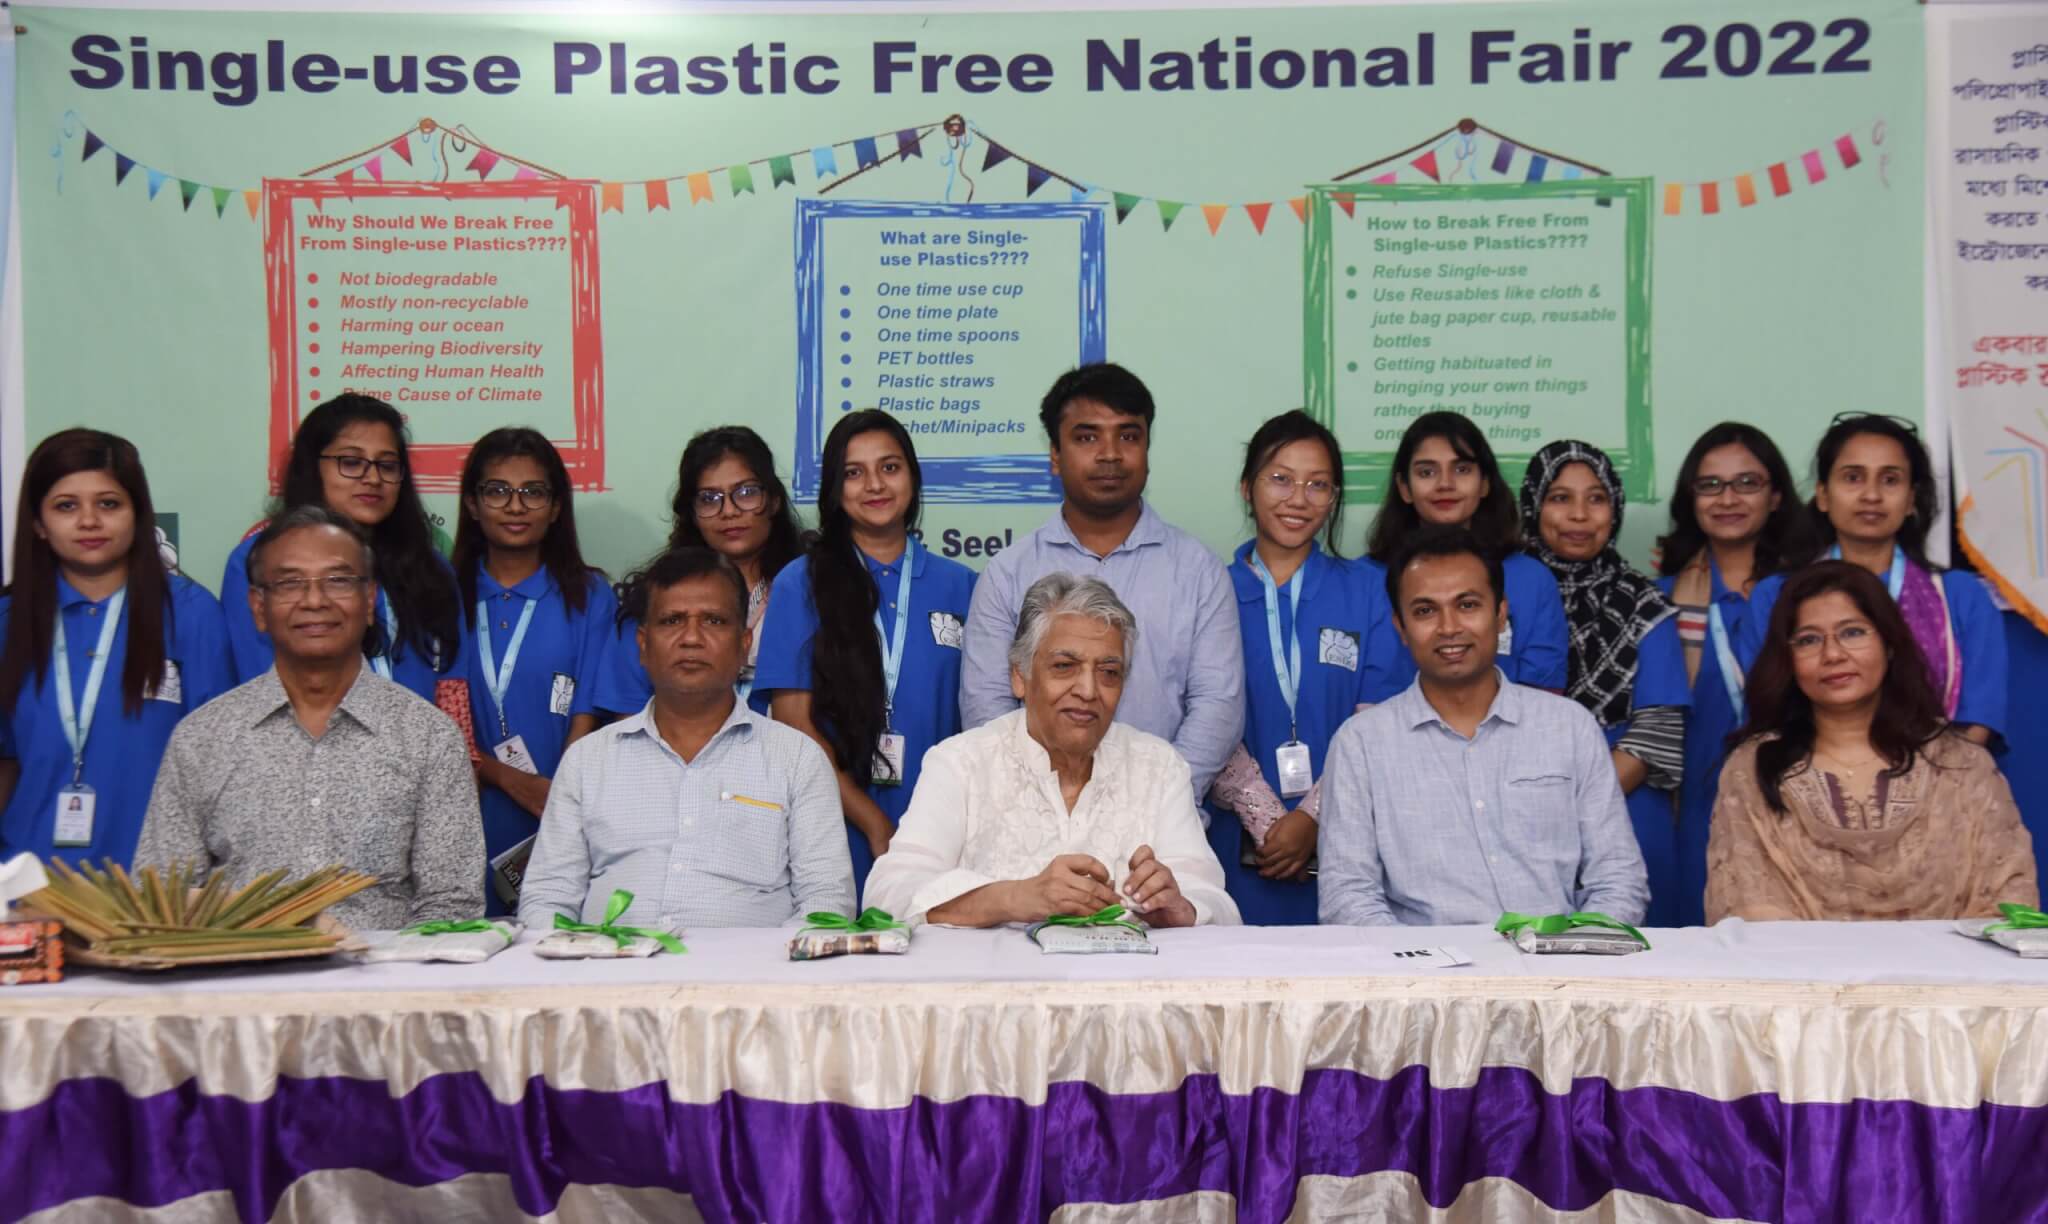 Single-use Plastic Free Fair on National Level!